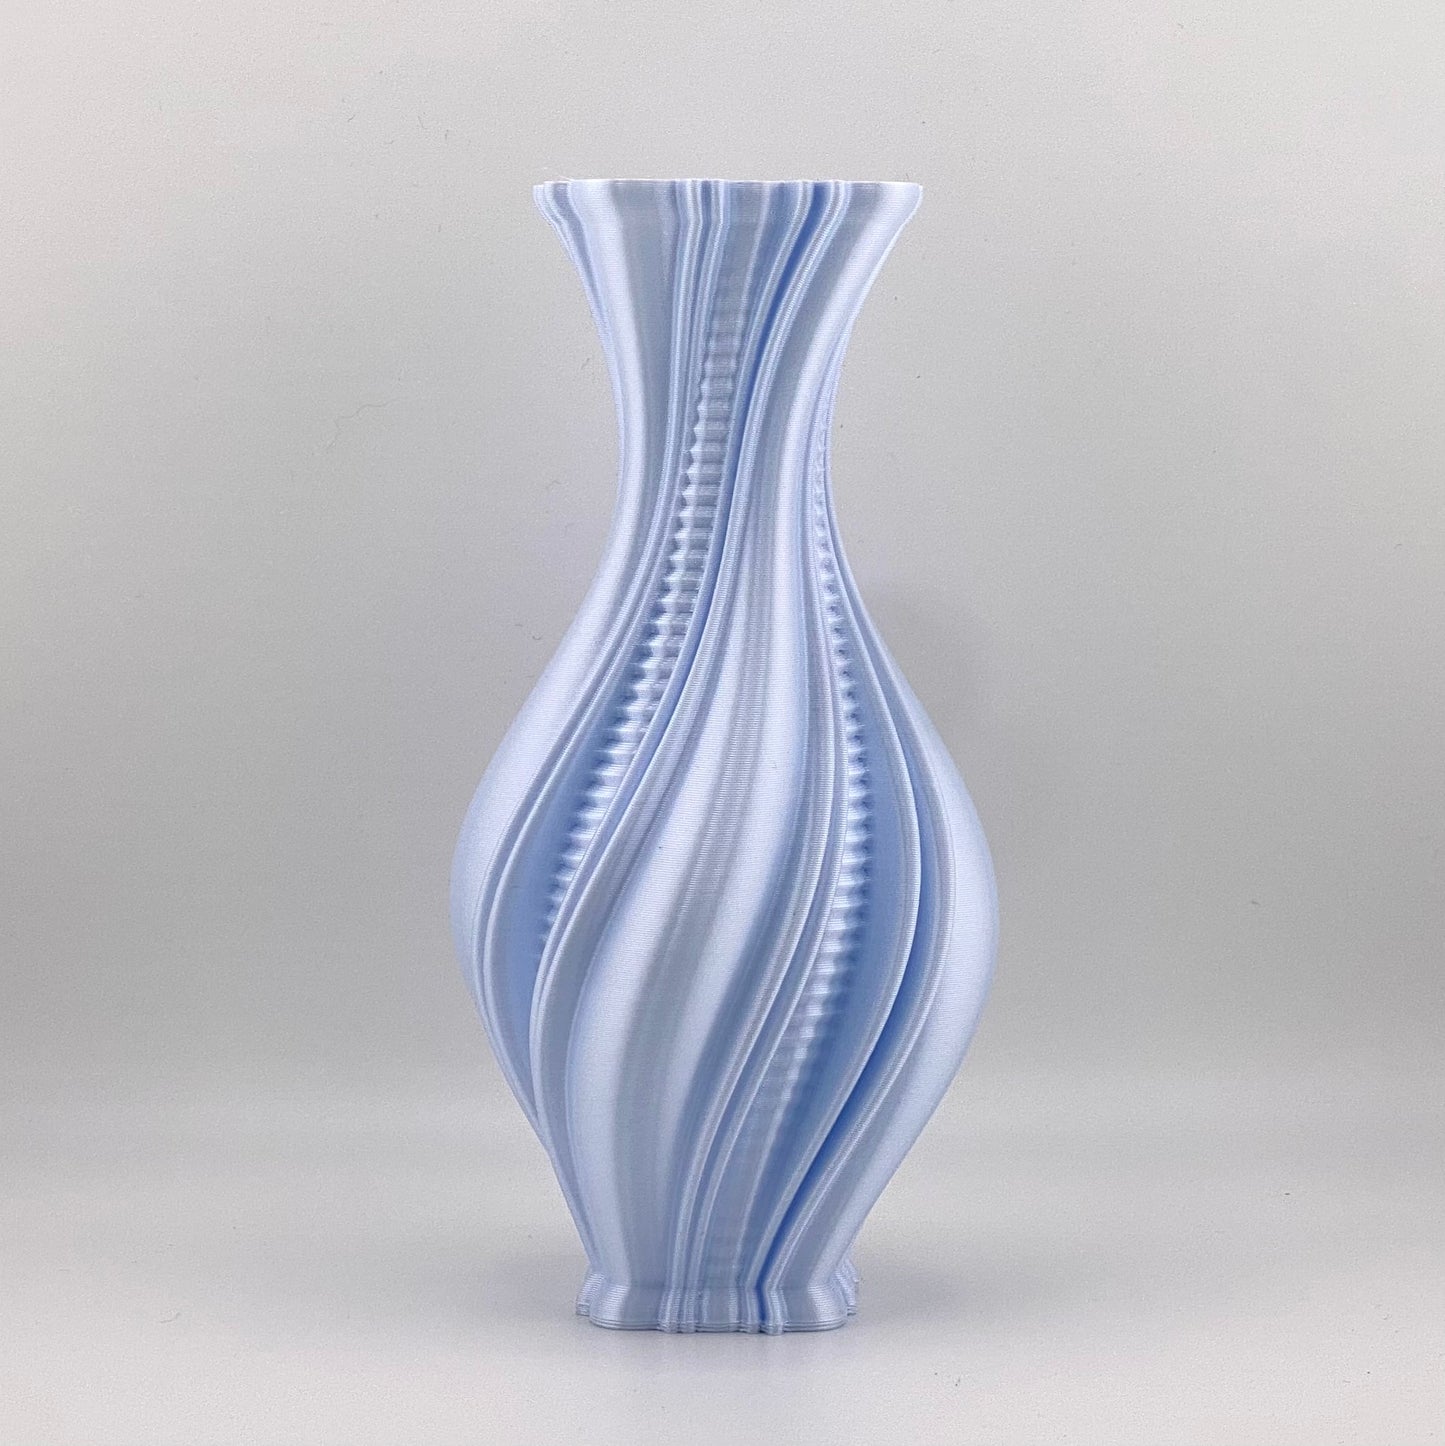 Resplendence Vase 3D printed in Polar White glossy filament